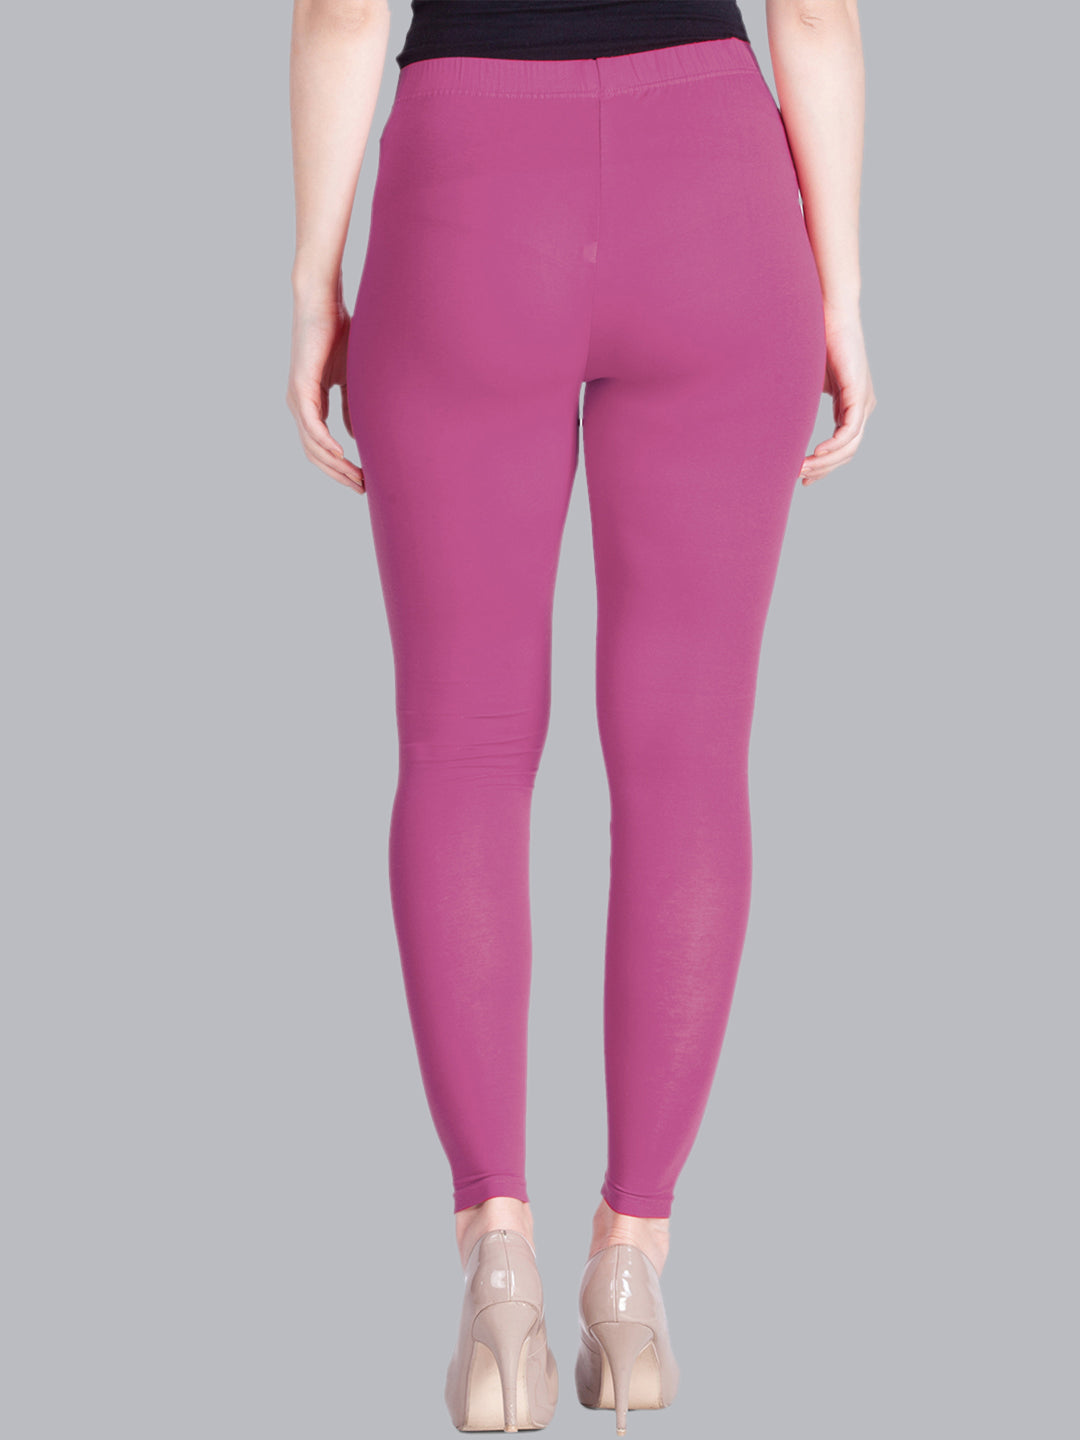 Lucky Brand | Pants & Jumpsuits | Lucky Brand Dynamic Legging Dark Pink |  Poshmark